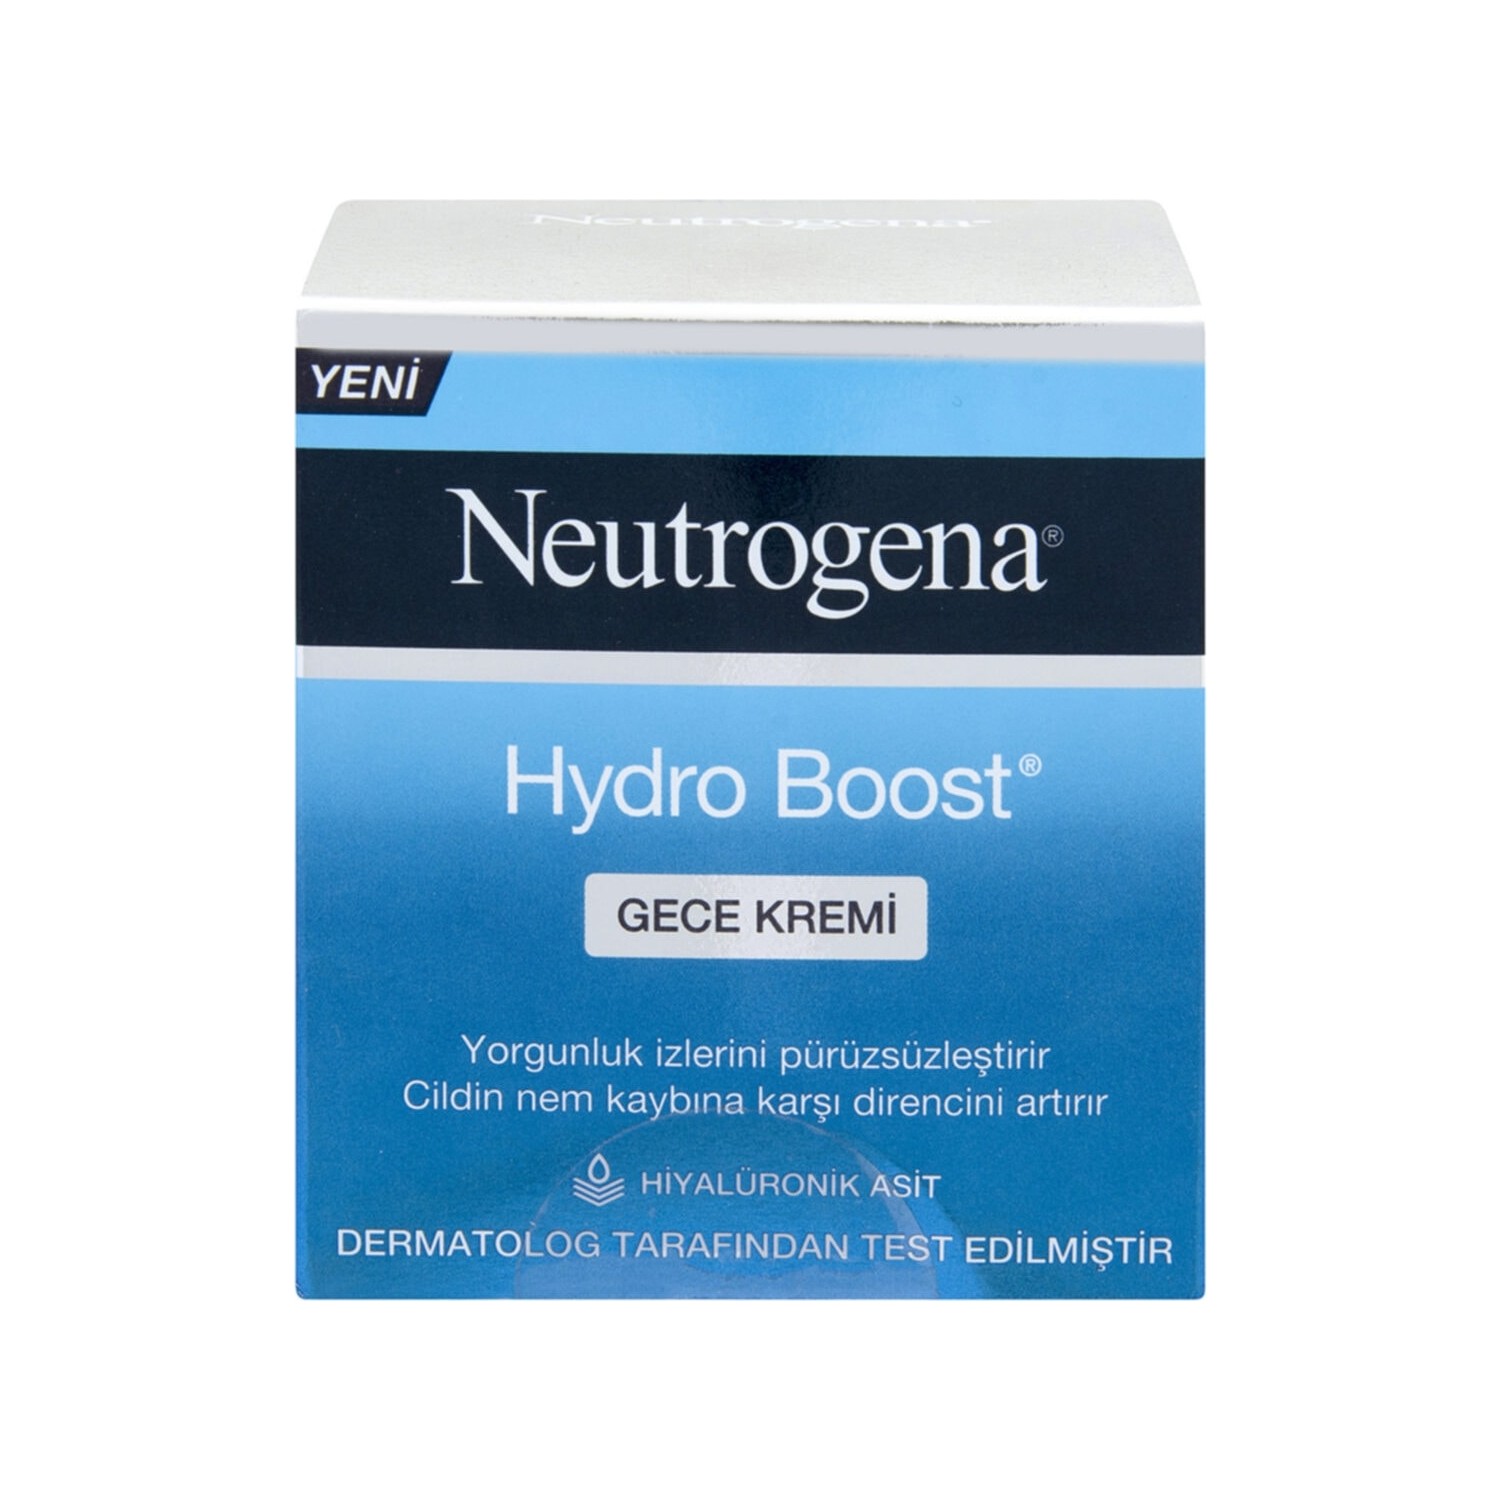 Ночной крем Hydro Boost, 50 мл гель крем neutrogena hydro boost для сухой кожи 50 мл